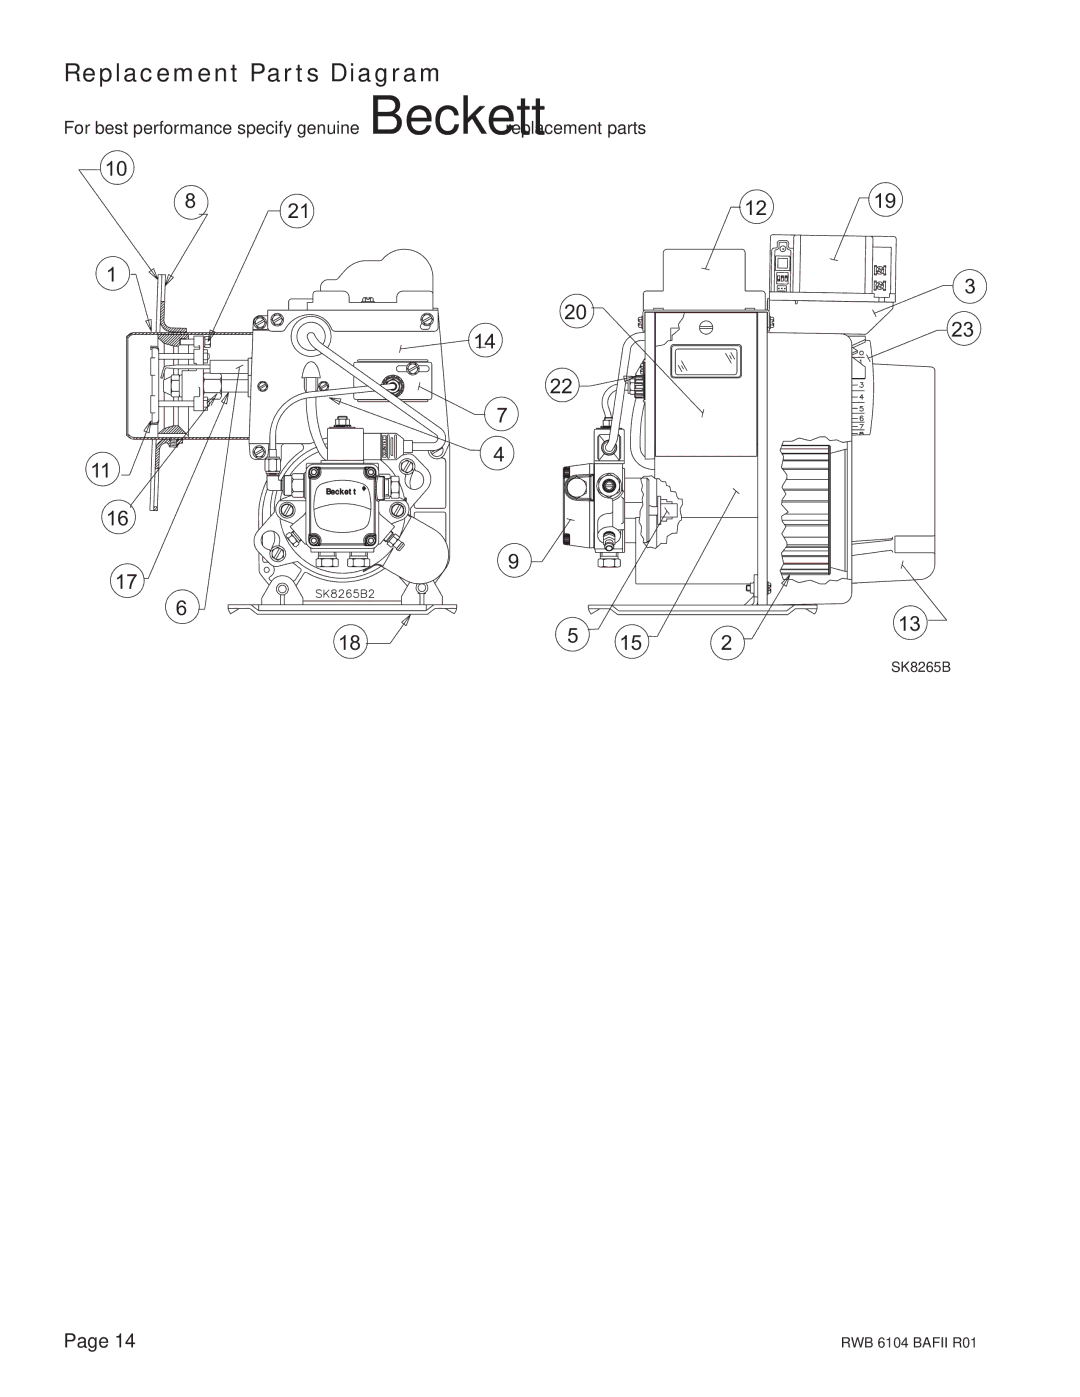 Beckett AFII 150, FII 85, AFII 100 manual Replacement Parts Diagram 